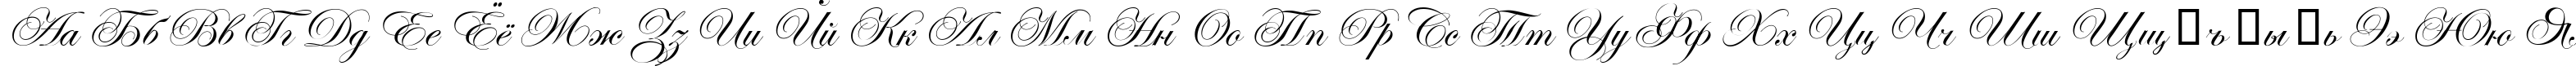 Пример написания русского алфавита шрифтом Edwardian Scr ITC TT